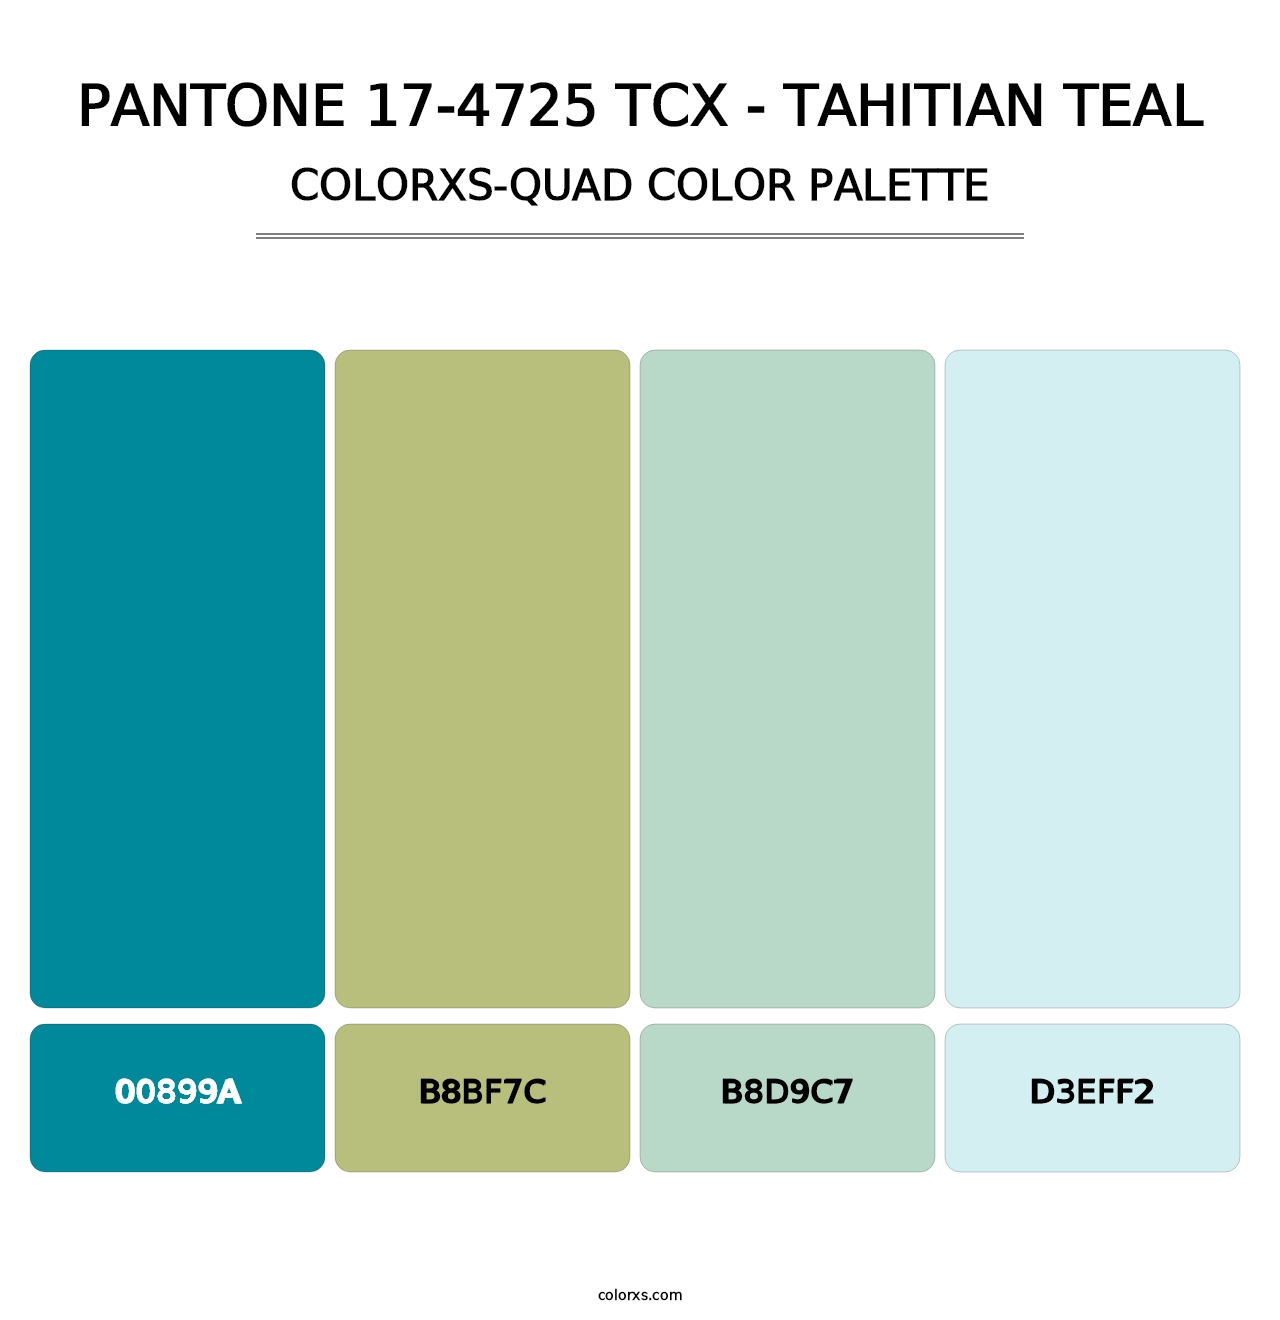 PANTONE 17-4725 TCX - Tahitian Teal - Colorxs Quad Palette